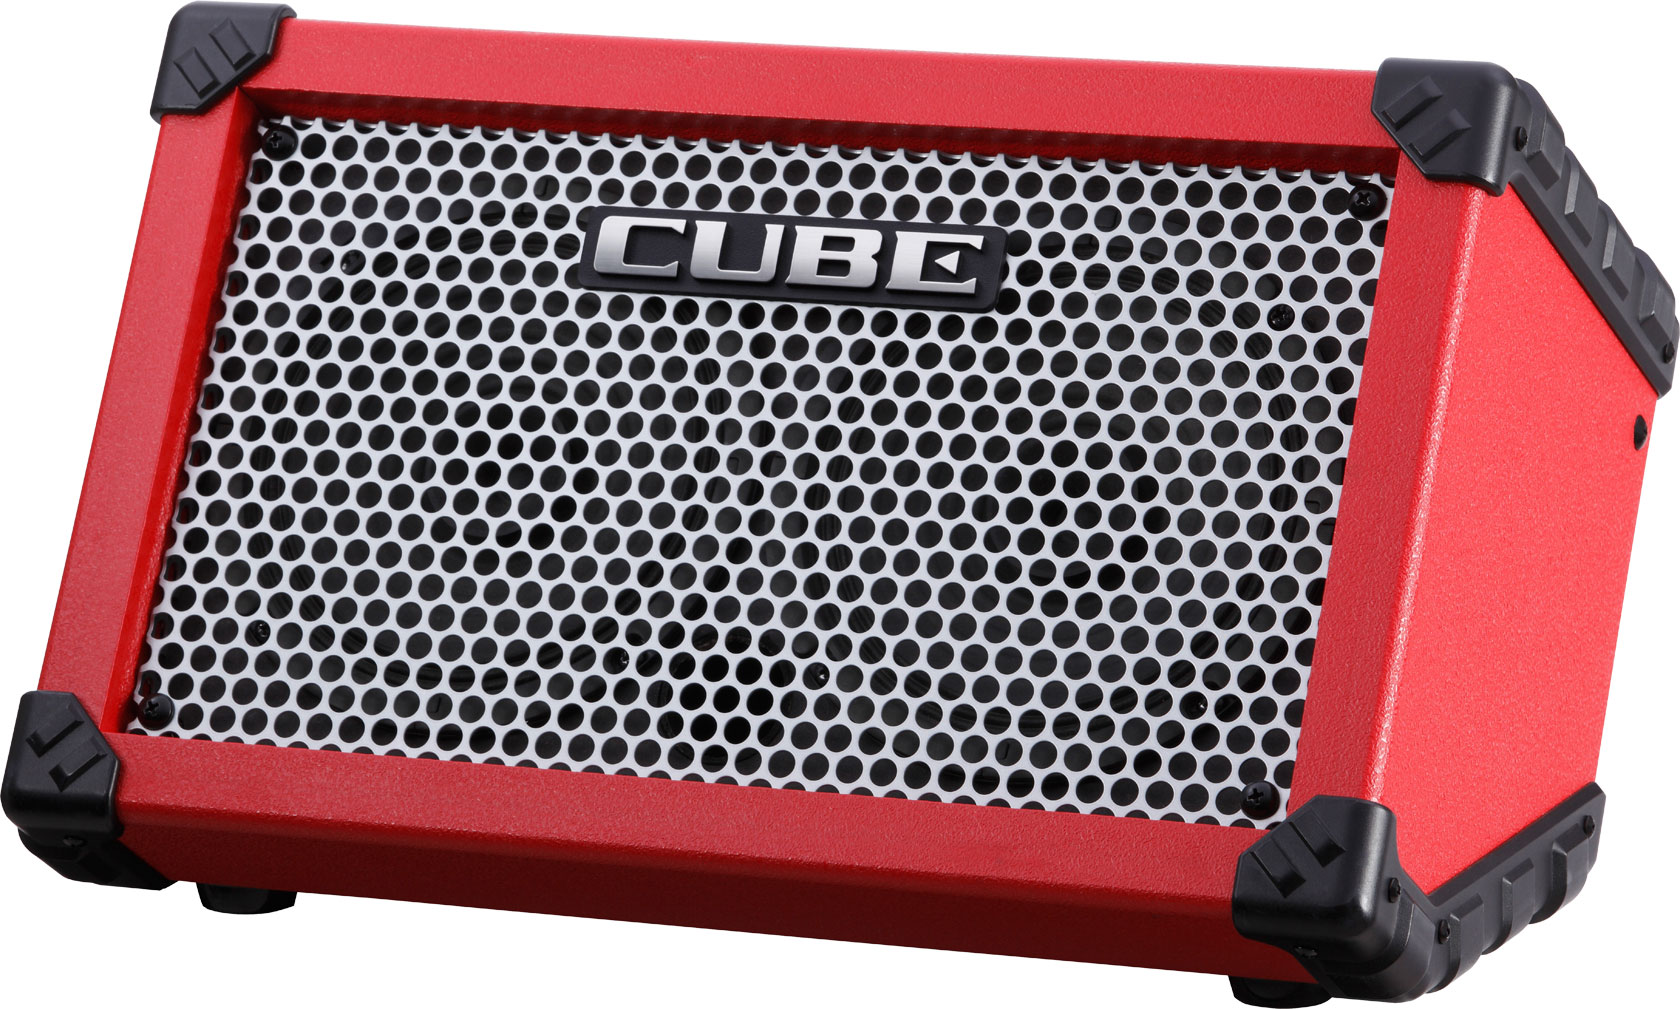 CUBE-ST (Red) гитарный комбо